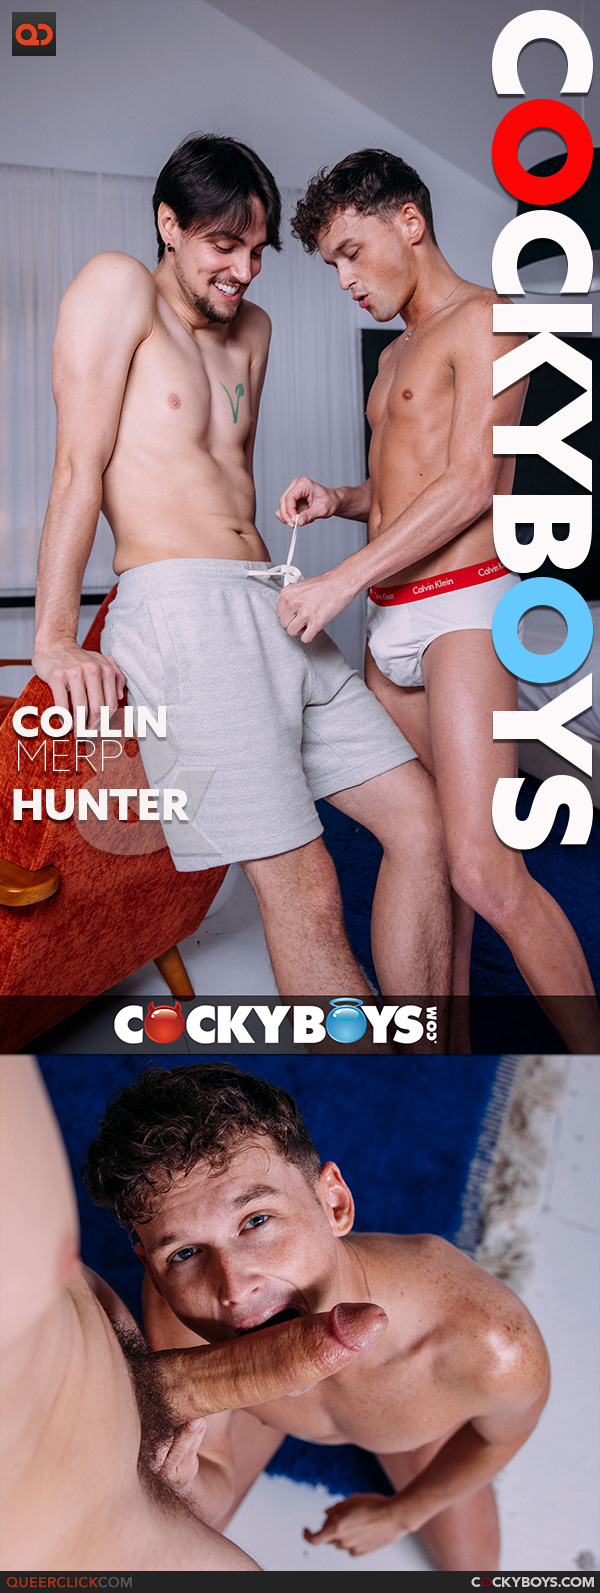 CockyBoys: Collin Merp and Hunter